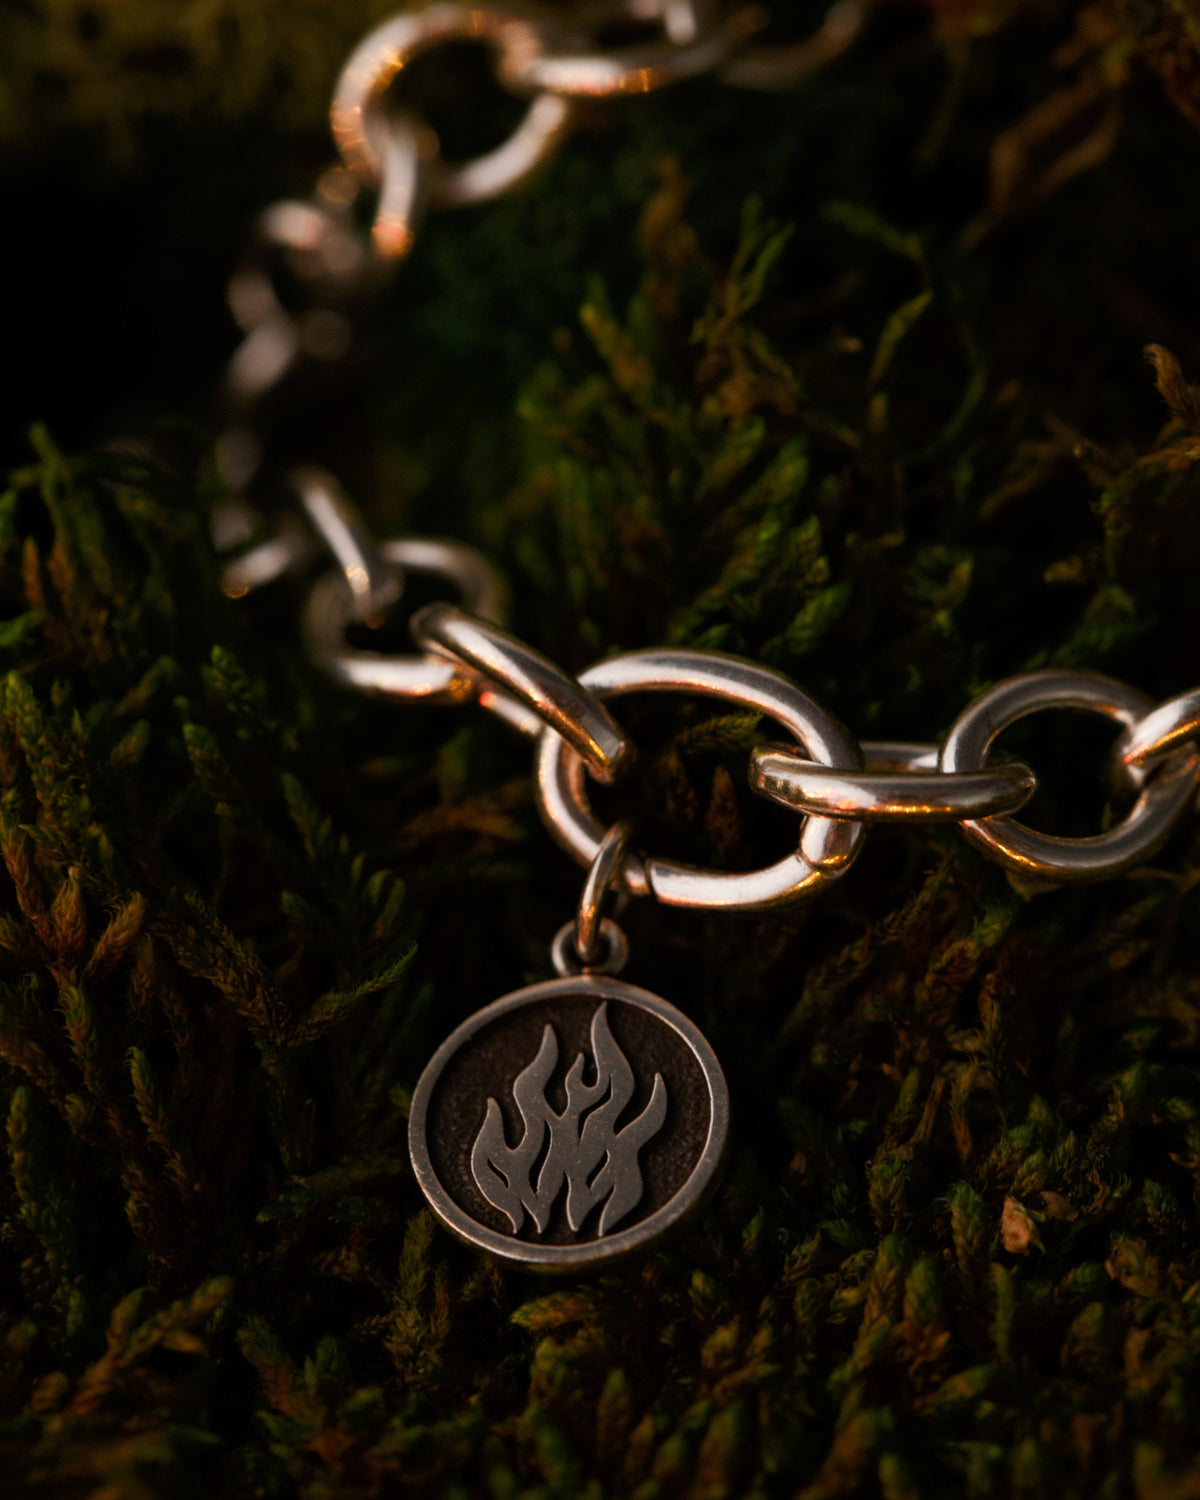 Fire Element Chain Bracelet